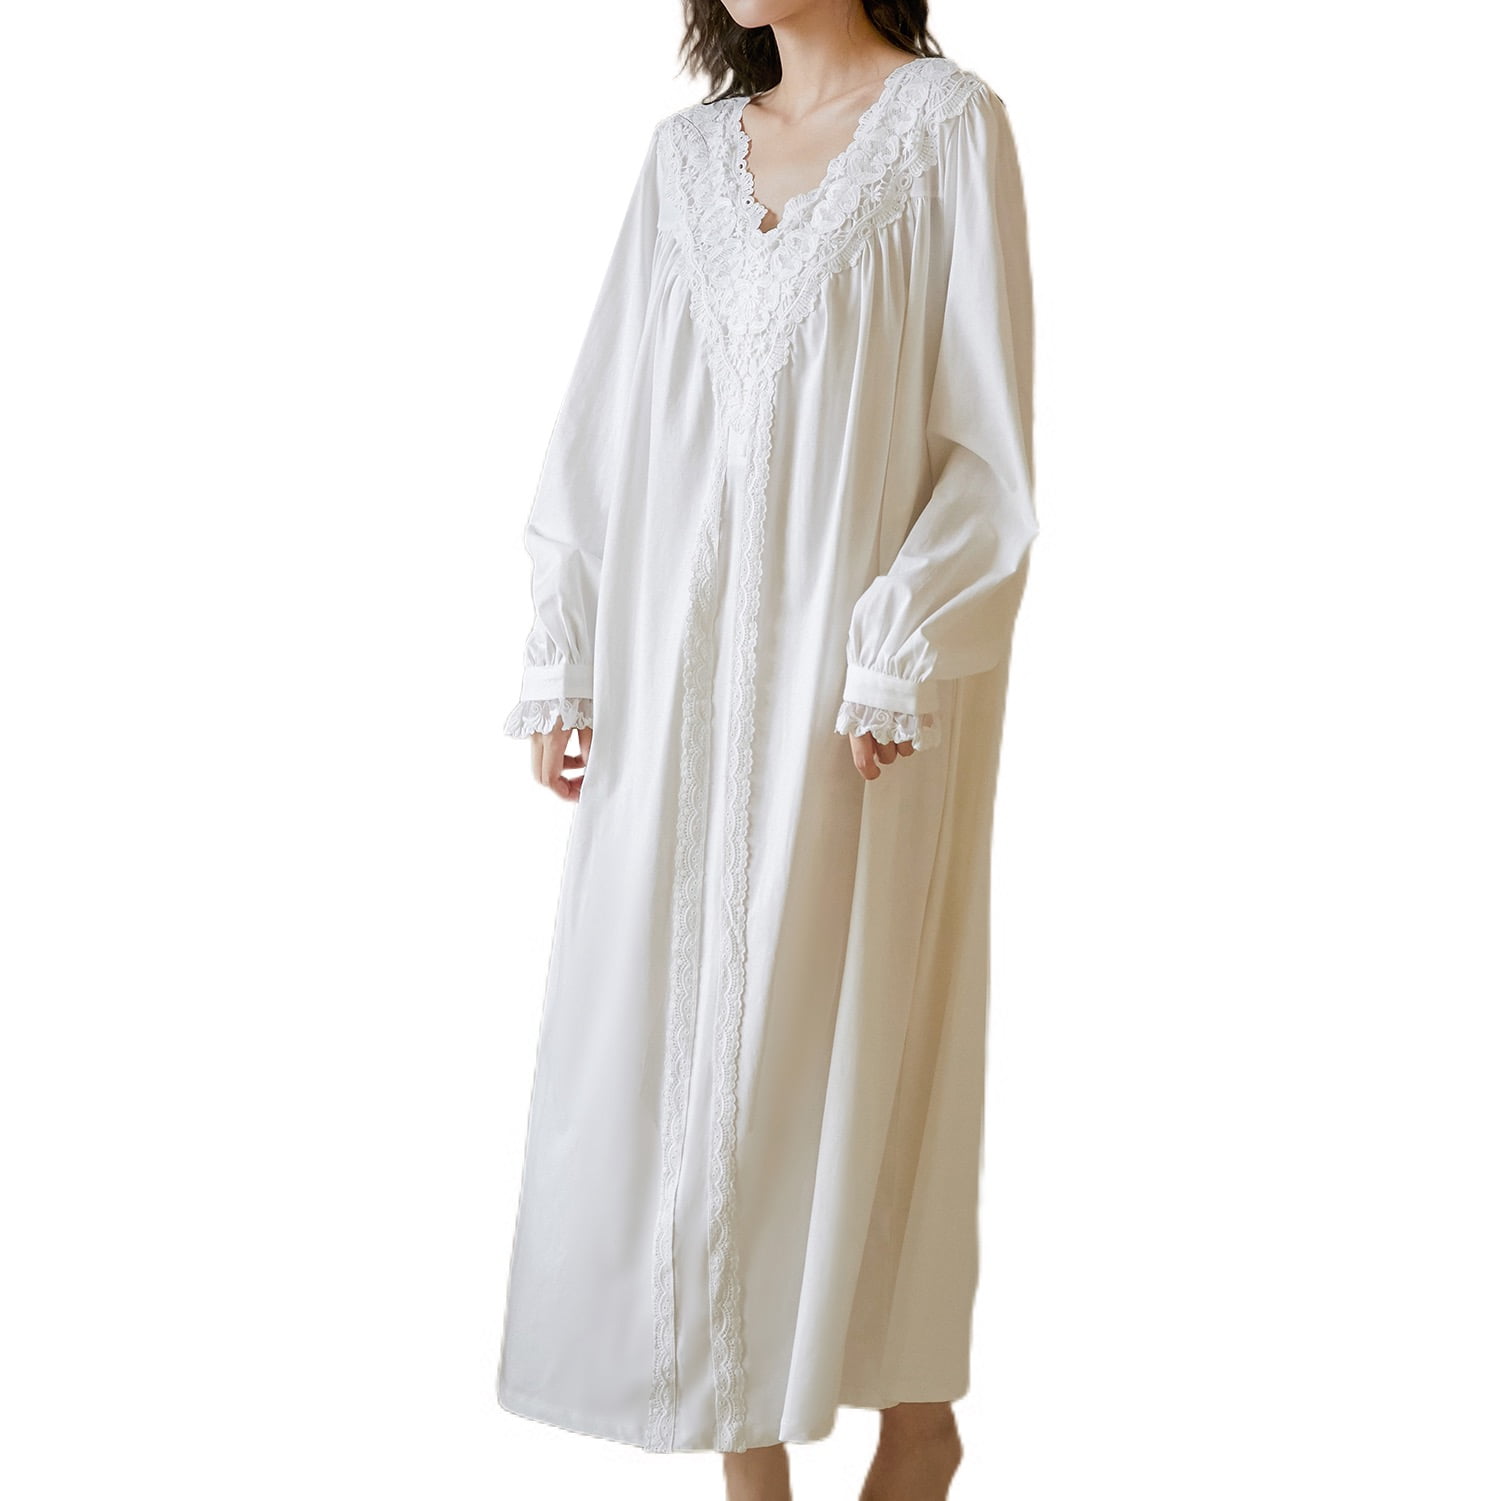 Homgro Women's Victorian Nightgown Cute Cotton Lace Bishop Sleeve Sleep Shirt  Long Pajama Dress Soft Frill V Neck Sleepwear Old Fashioned Vintage Princess  Nighty White X-Large 